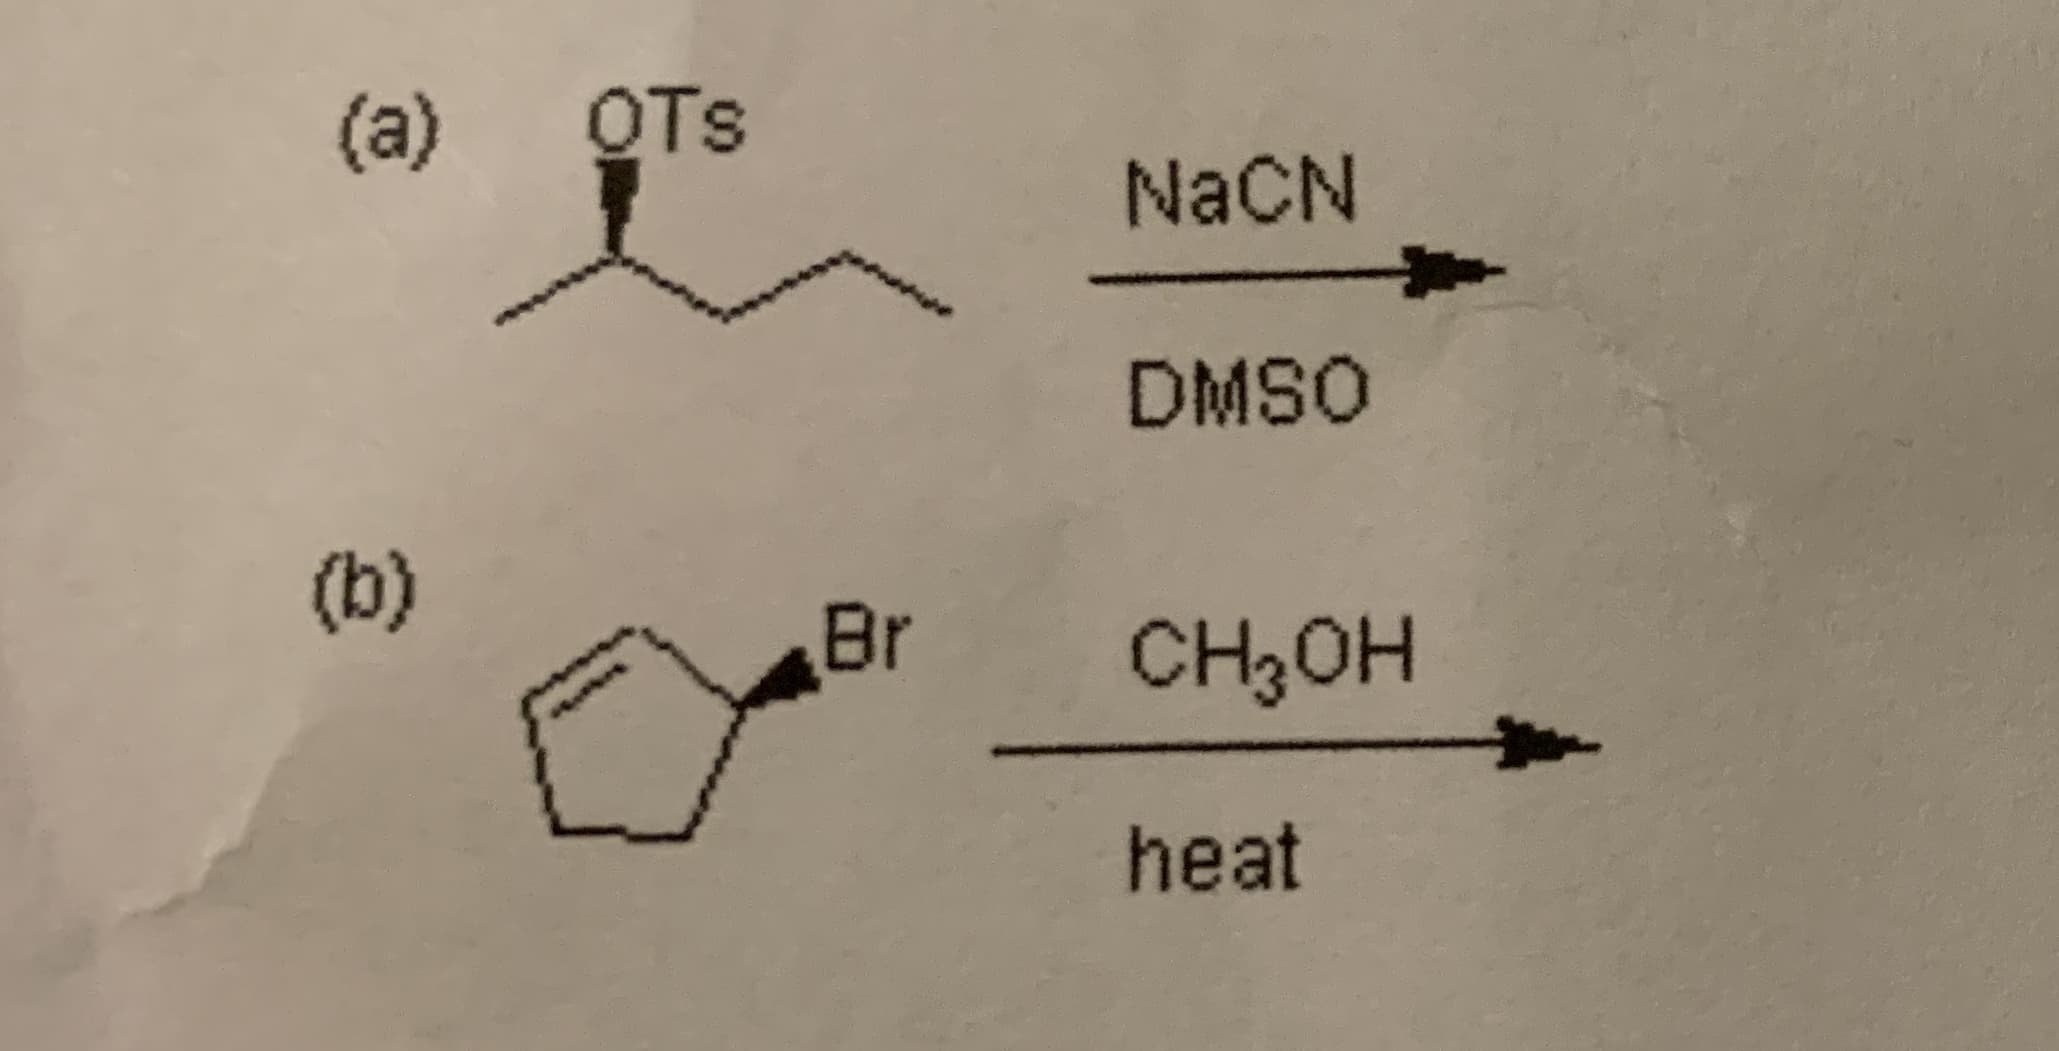 (a) QTs
NaCN
DMSO
(b)
Br
CHBон
heat
